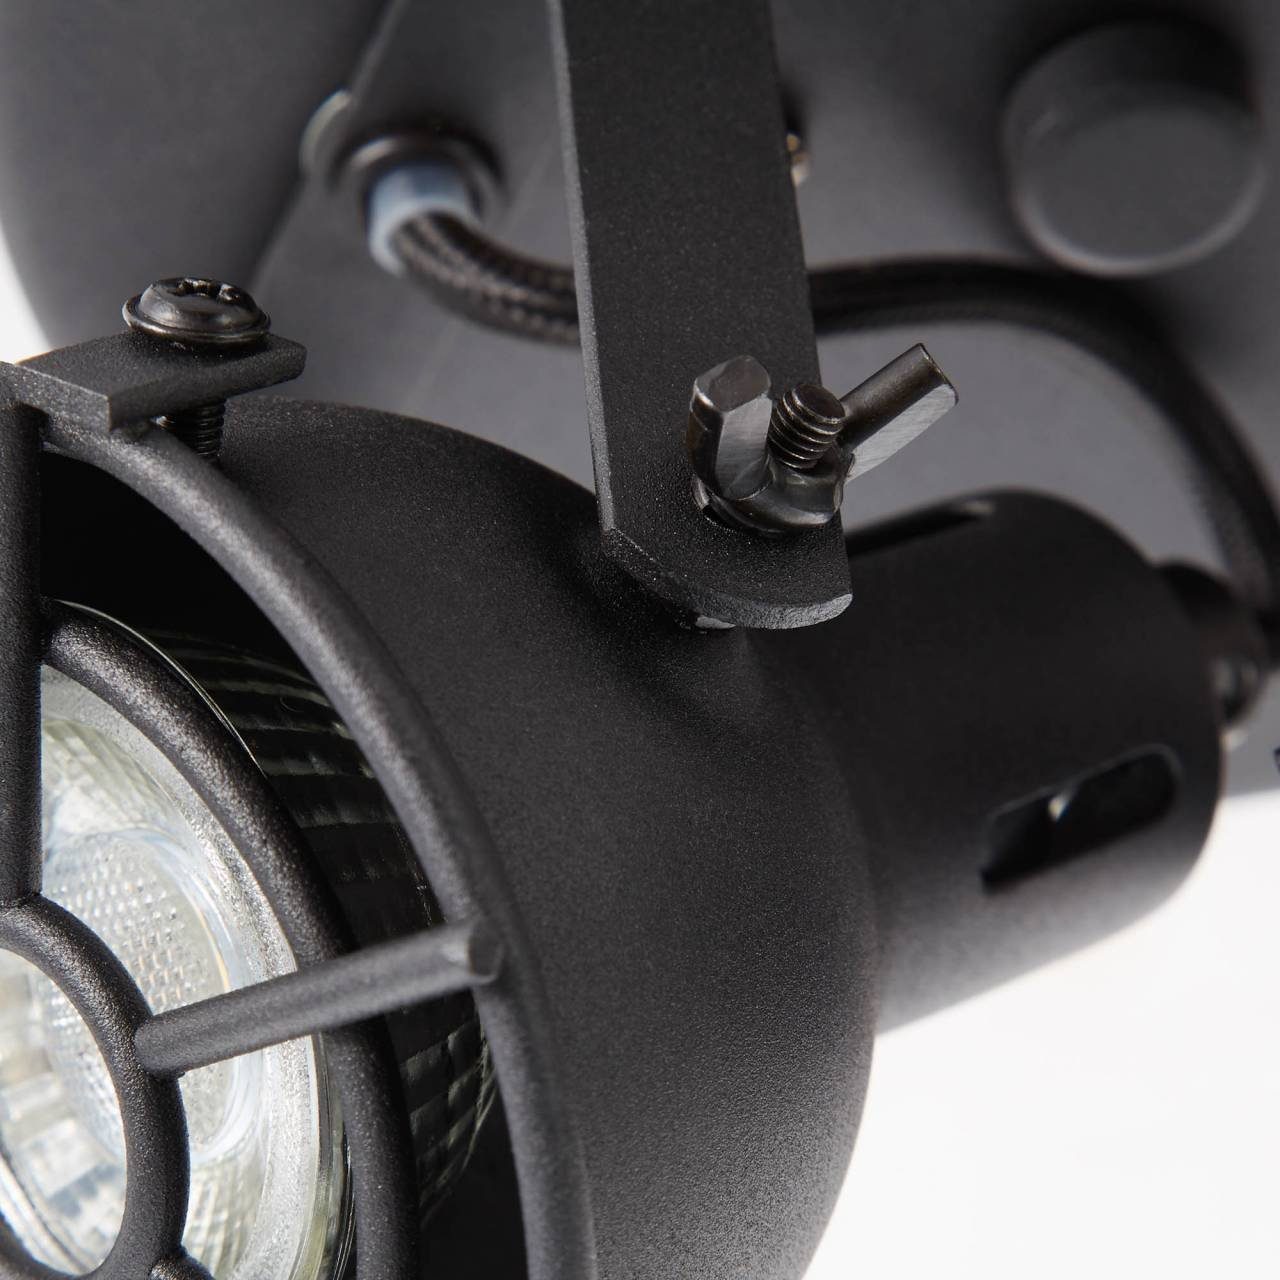 Brilliant Deckenleuchte GU10 Lampe 2x schwarz Spotrondell 2flg korund LED-PAR51, 3000K, Jesper, LED Jesper